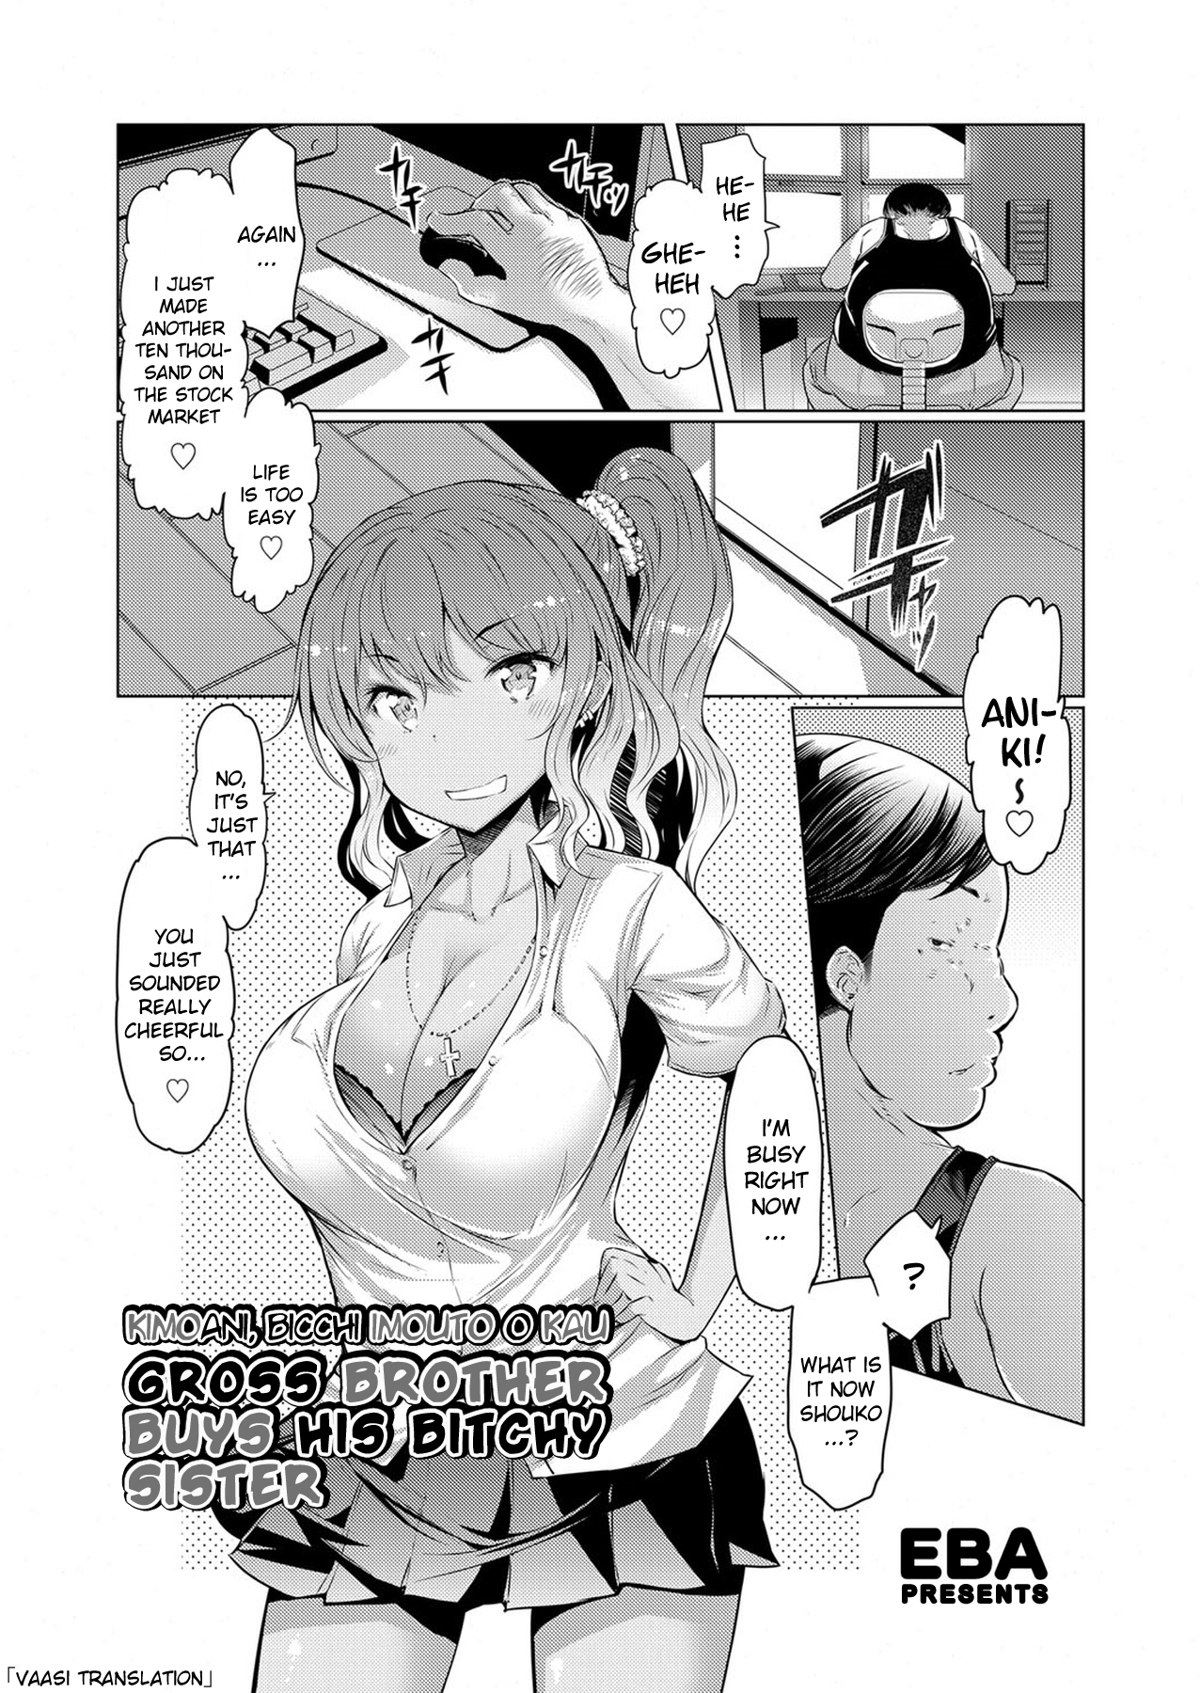 Read blowjob Porn comics Â» Page 4606 of 4830 Â» Hentai porns - Manga and  porncomics xxx 4606 hentai comics